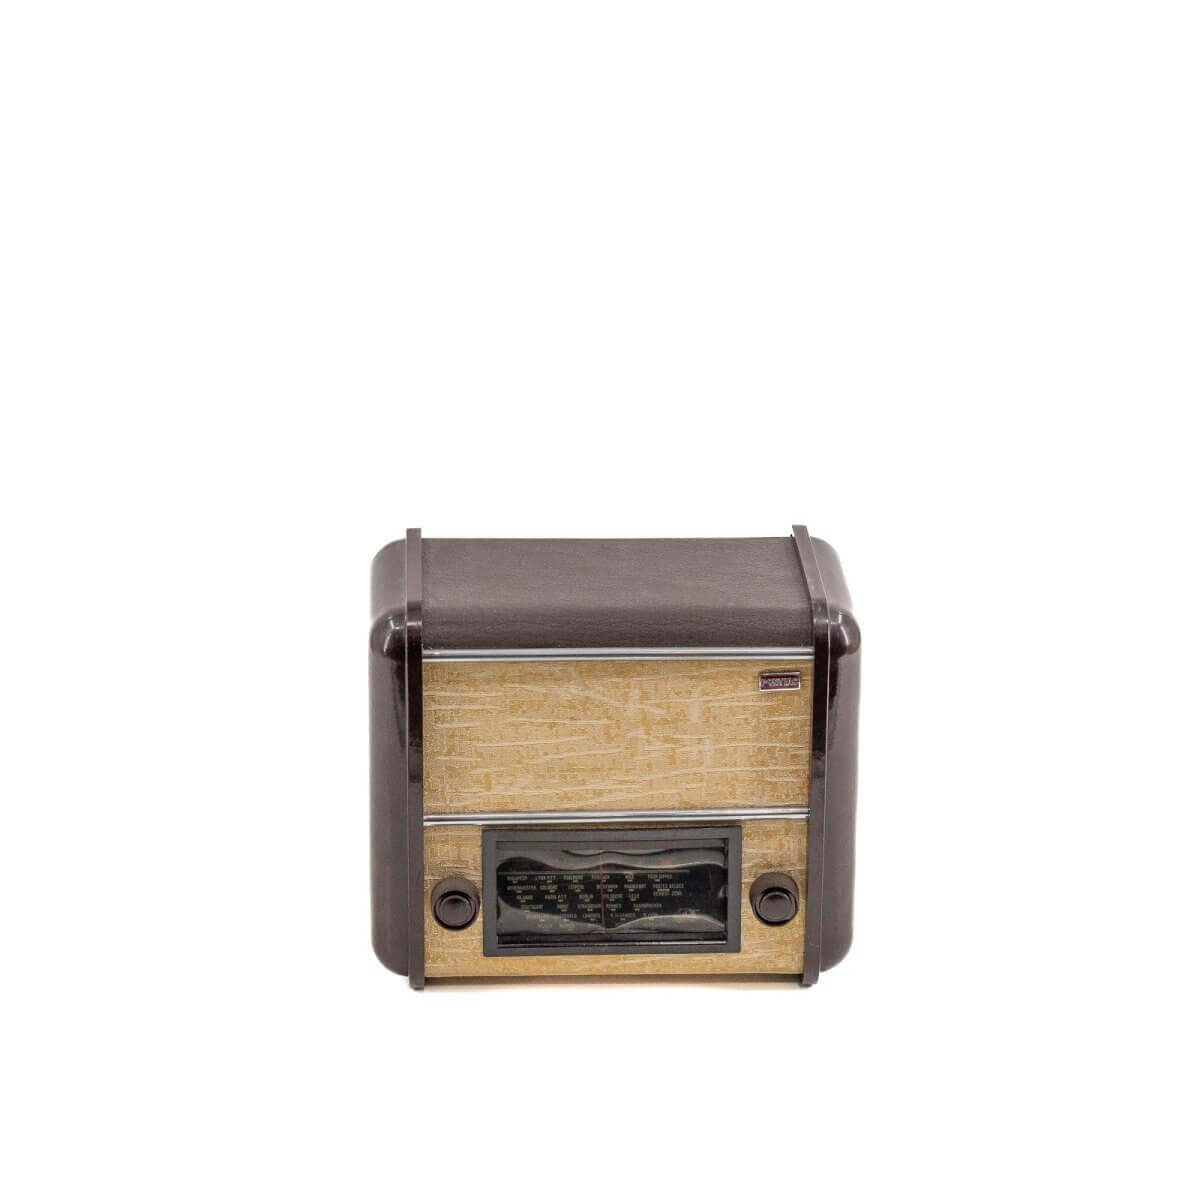 Radio Bluetooth Pontiac Vintage 50’S enceinte connectée bluetooth haut de gamme prodige radio vintage design